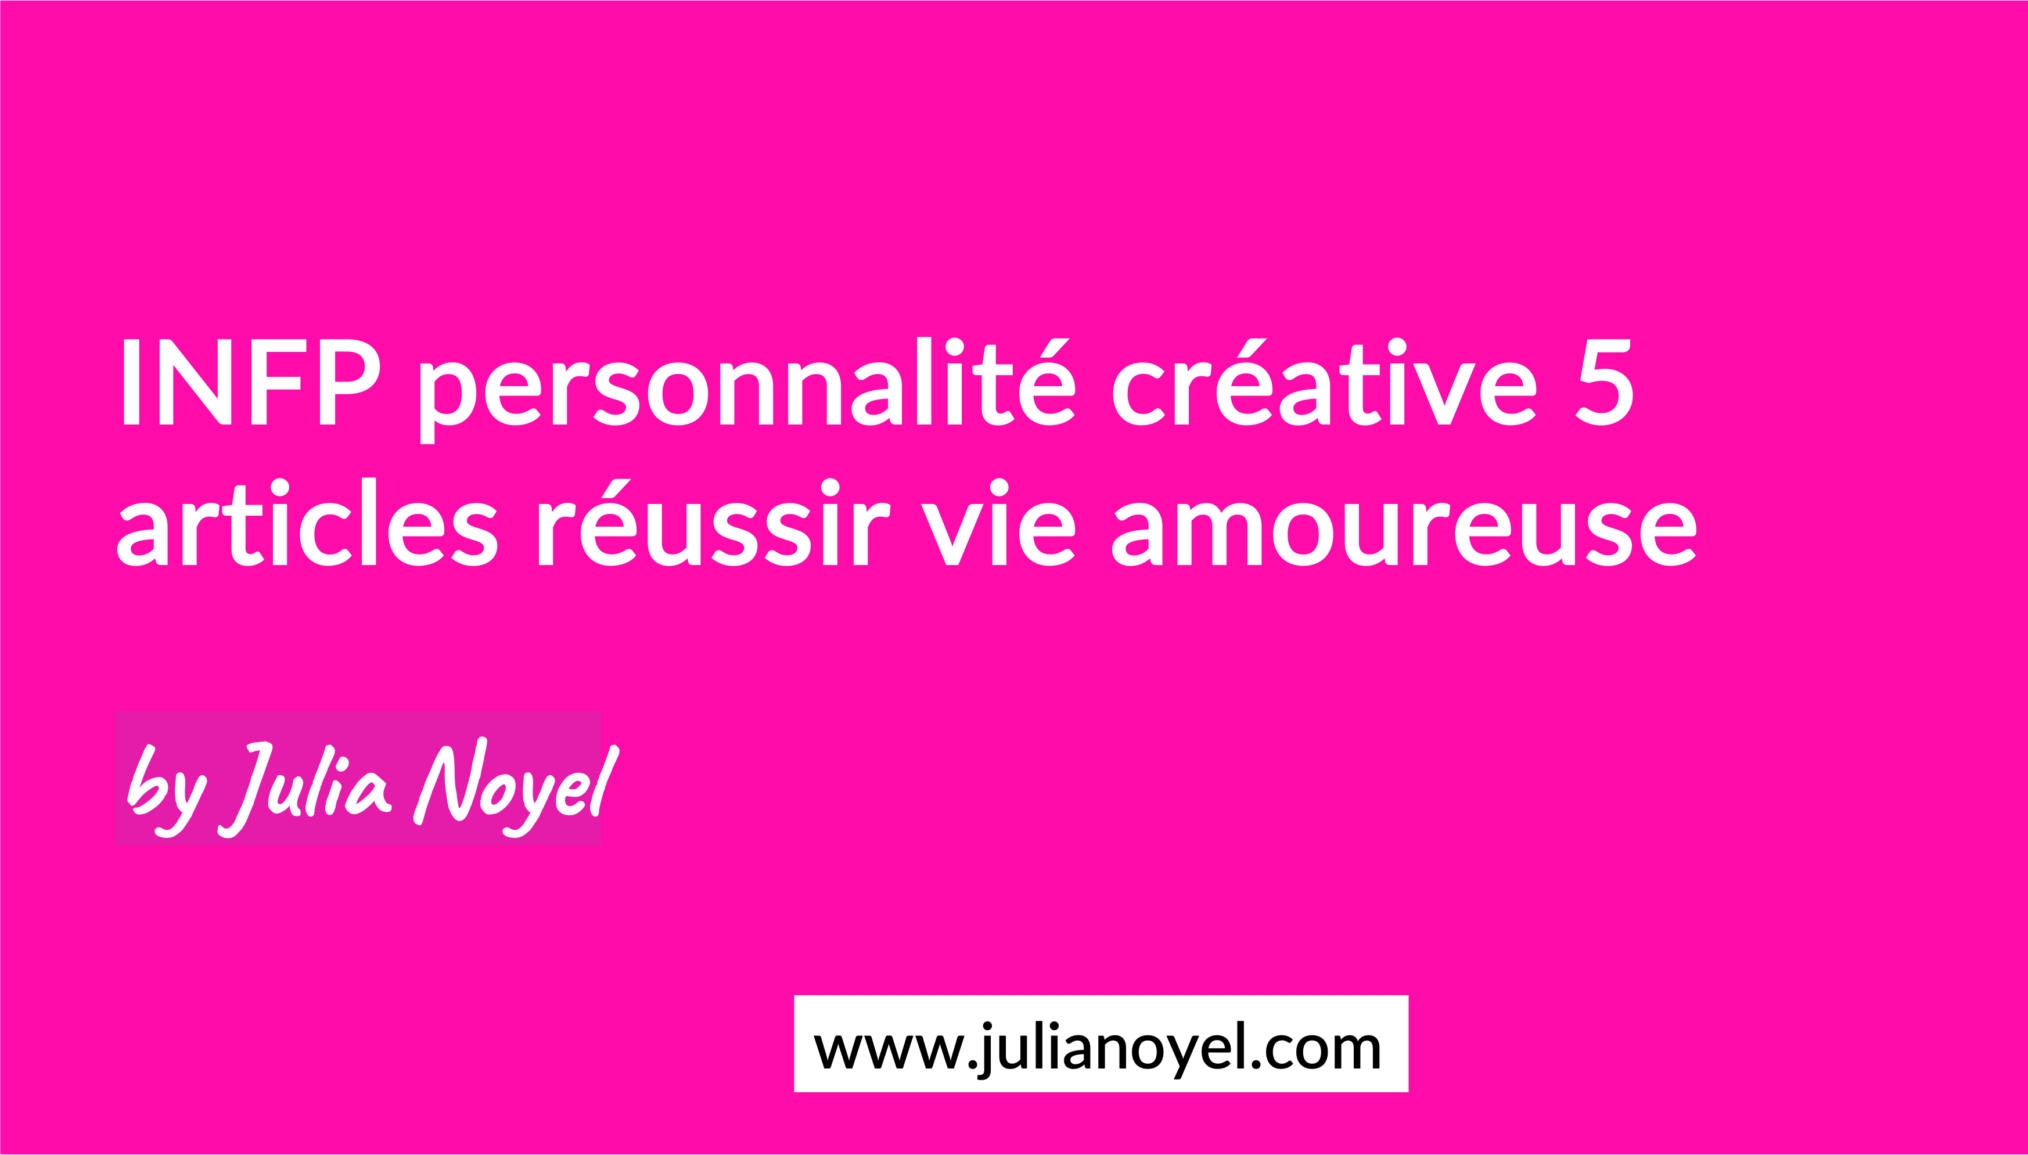 INFP personnalité créative 5 articles réussir vie amoureuse by Julia Noyel